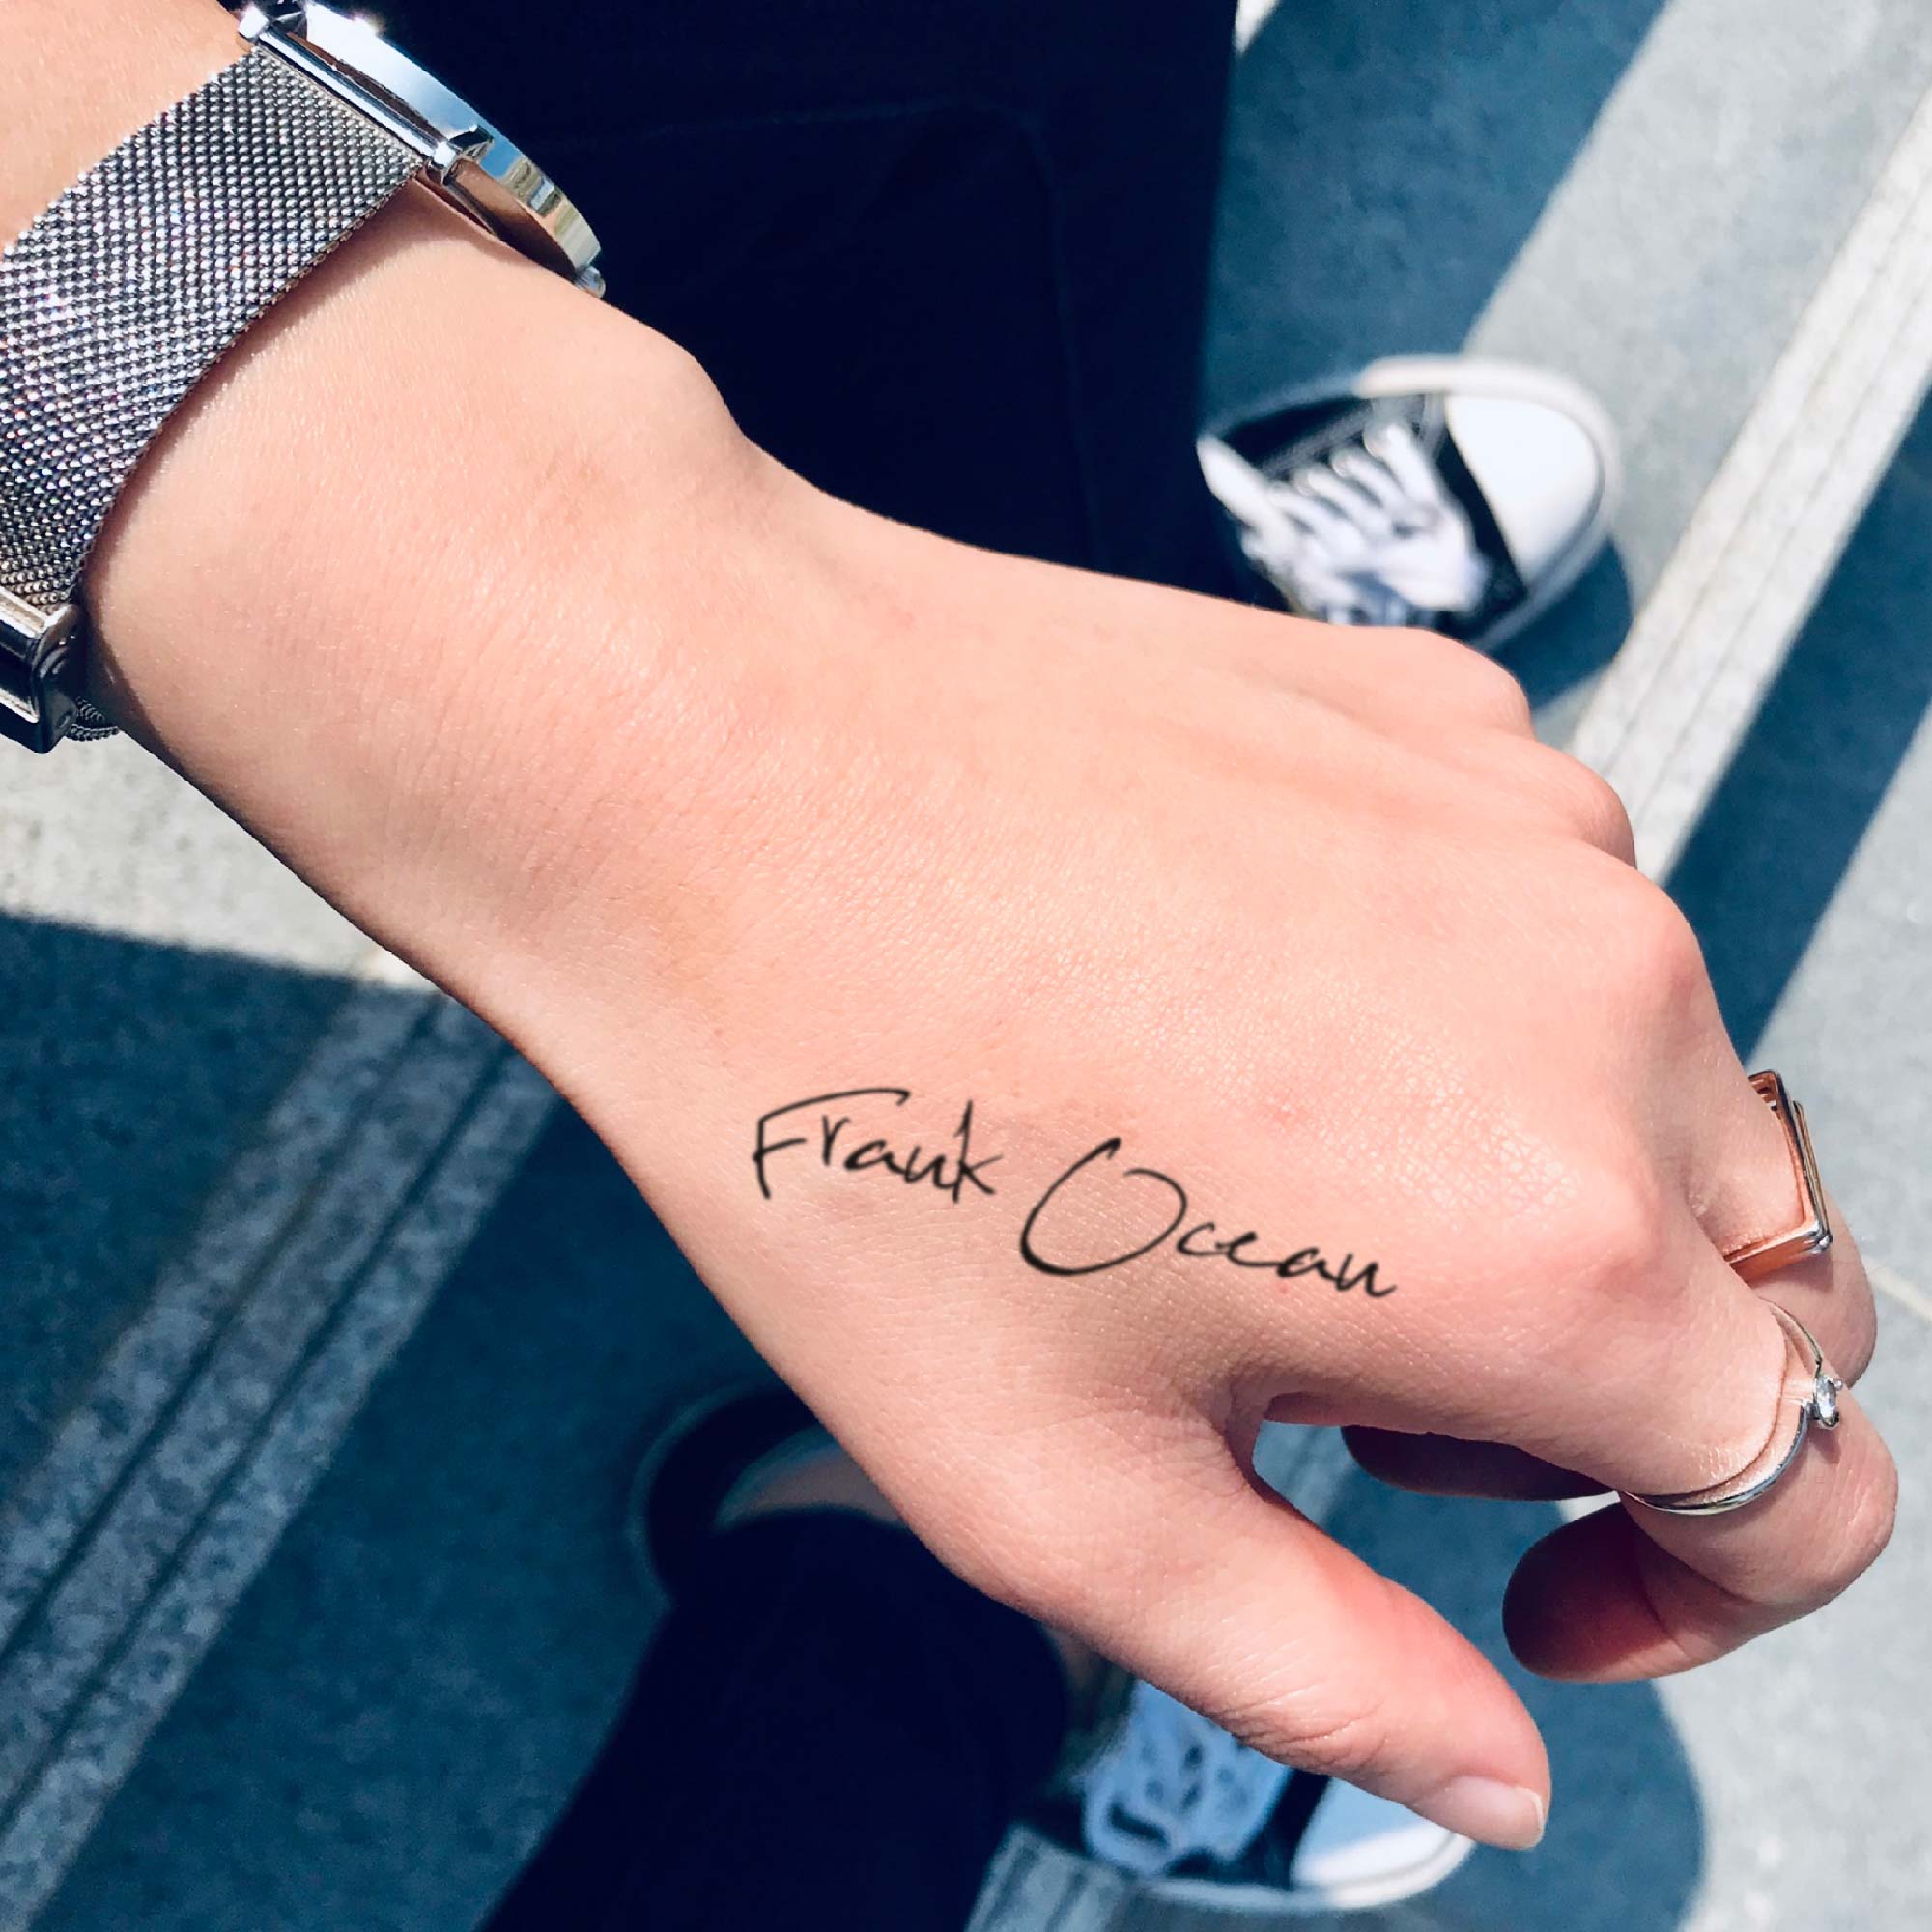 Frank Oceans Blonde CD Cover tattoo